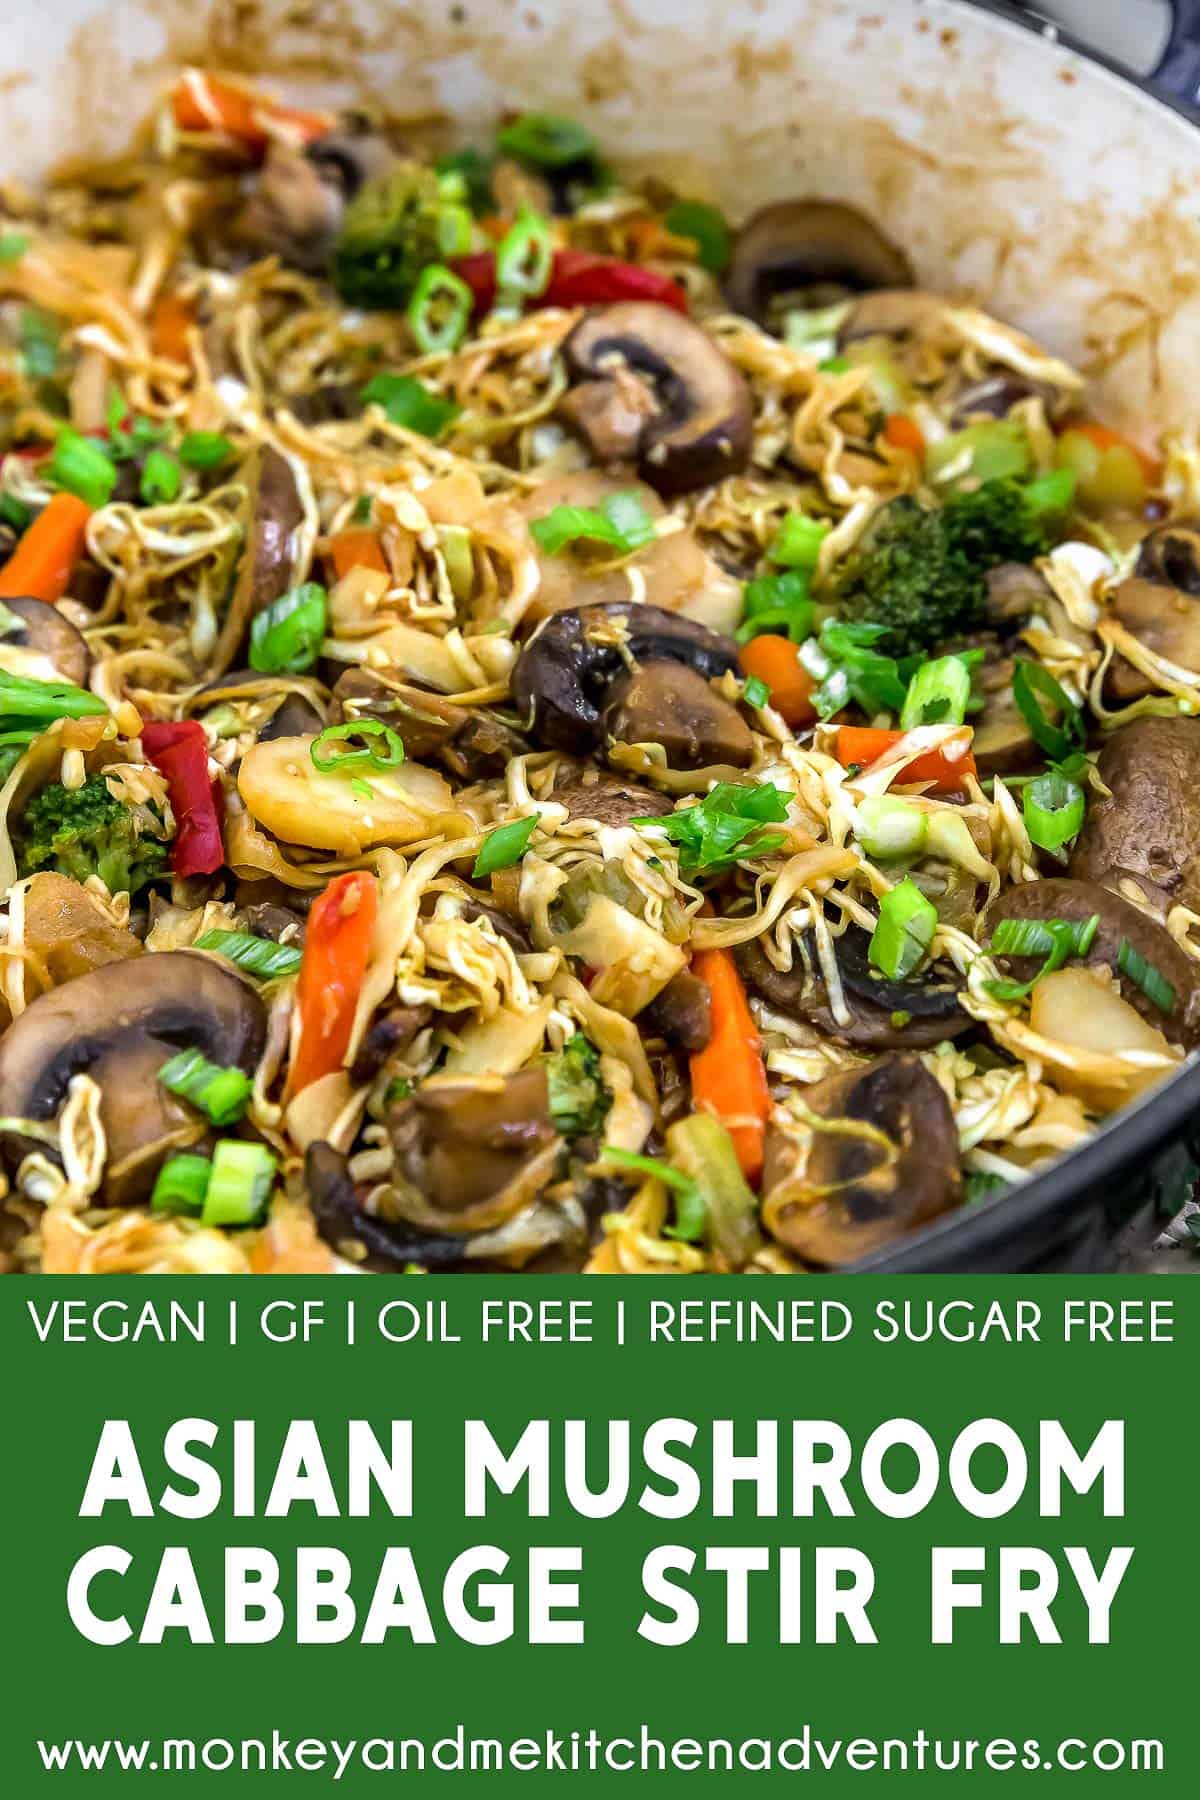 Asian Mushroom Cabbage Stir Fry with text description